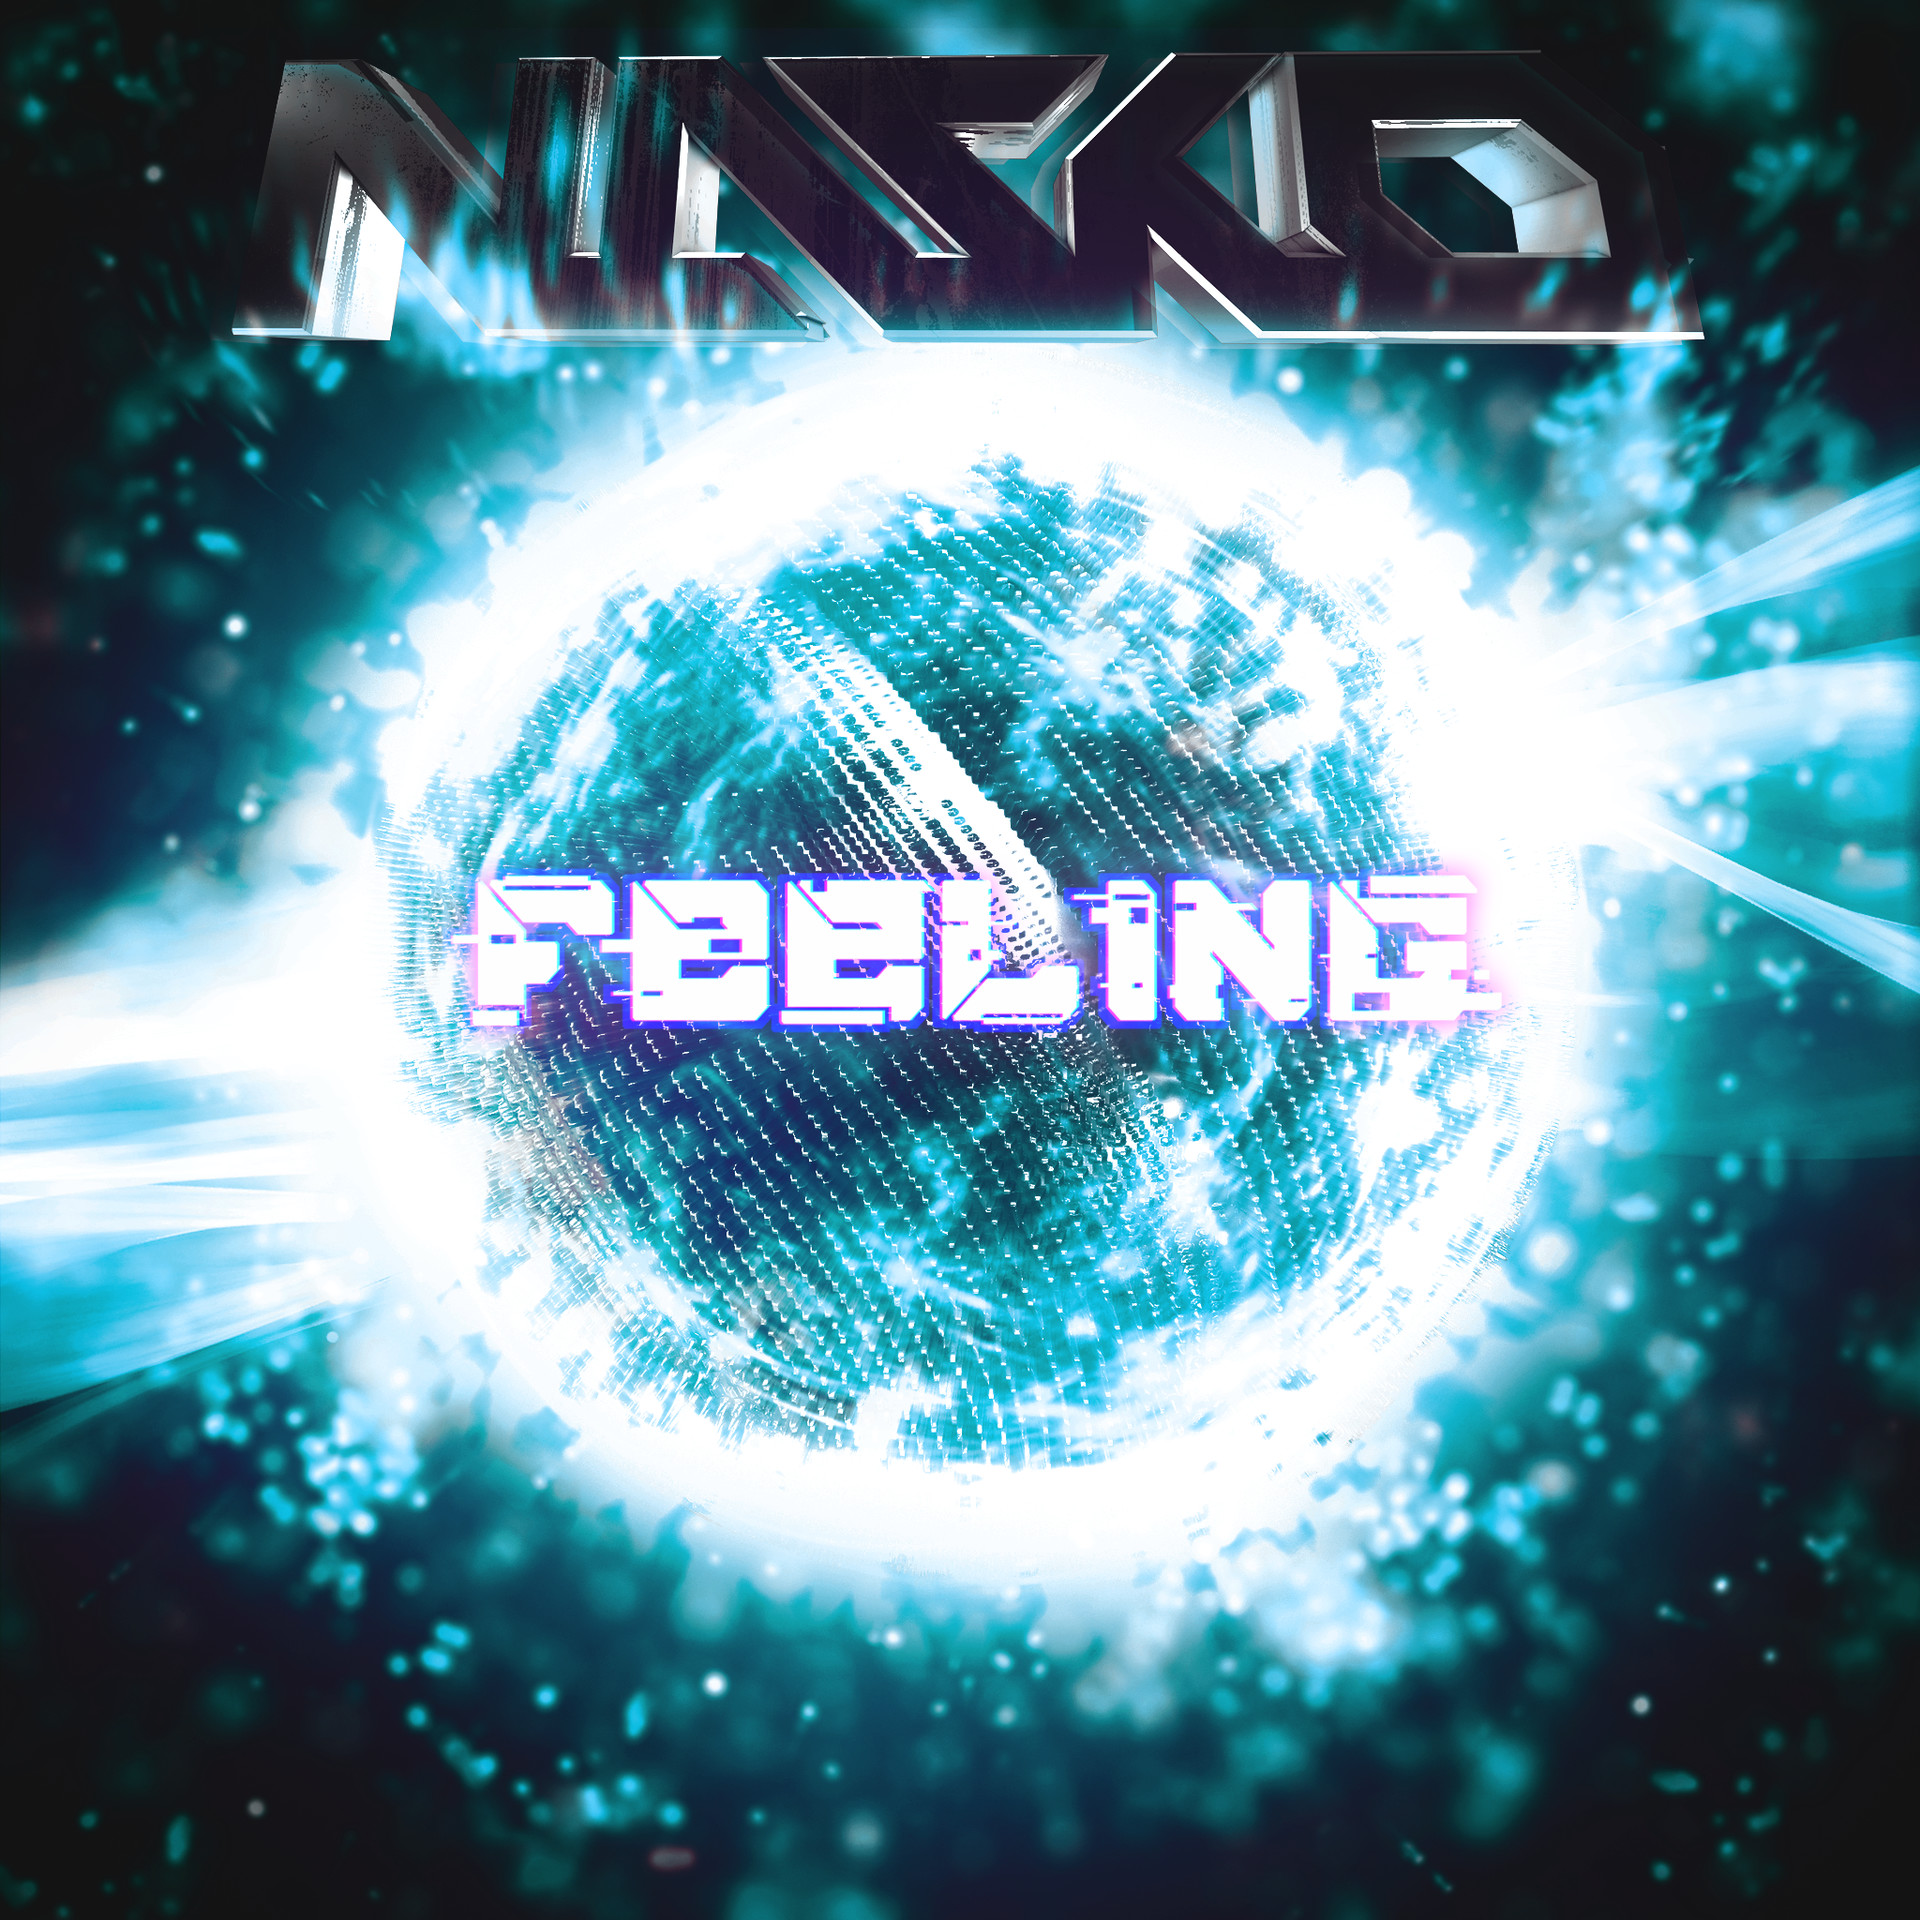 Tracking feeling. Nasko EDM. Nasko. Monstercat 010 - Conquest.